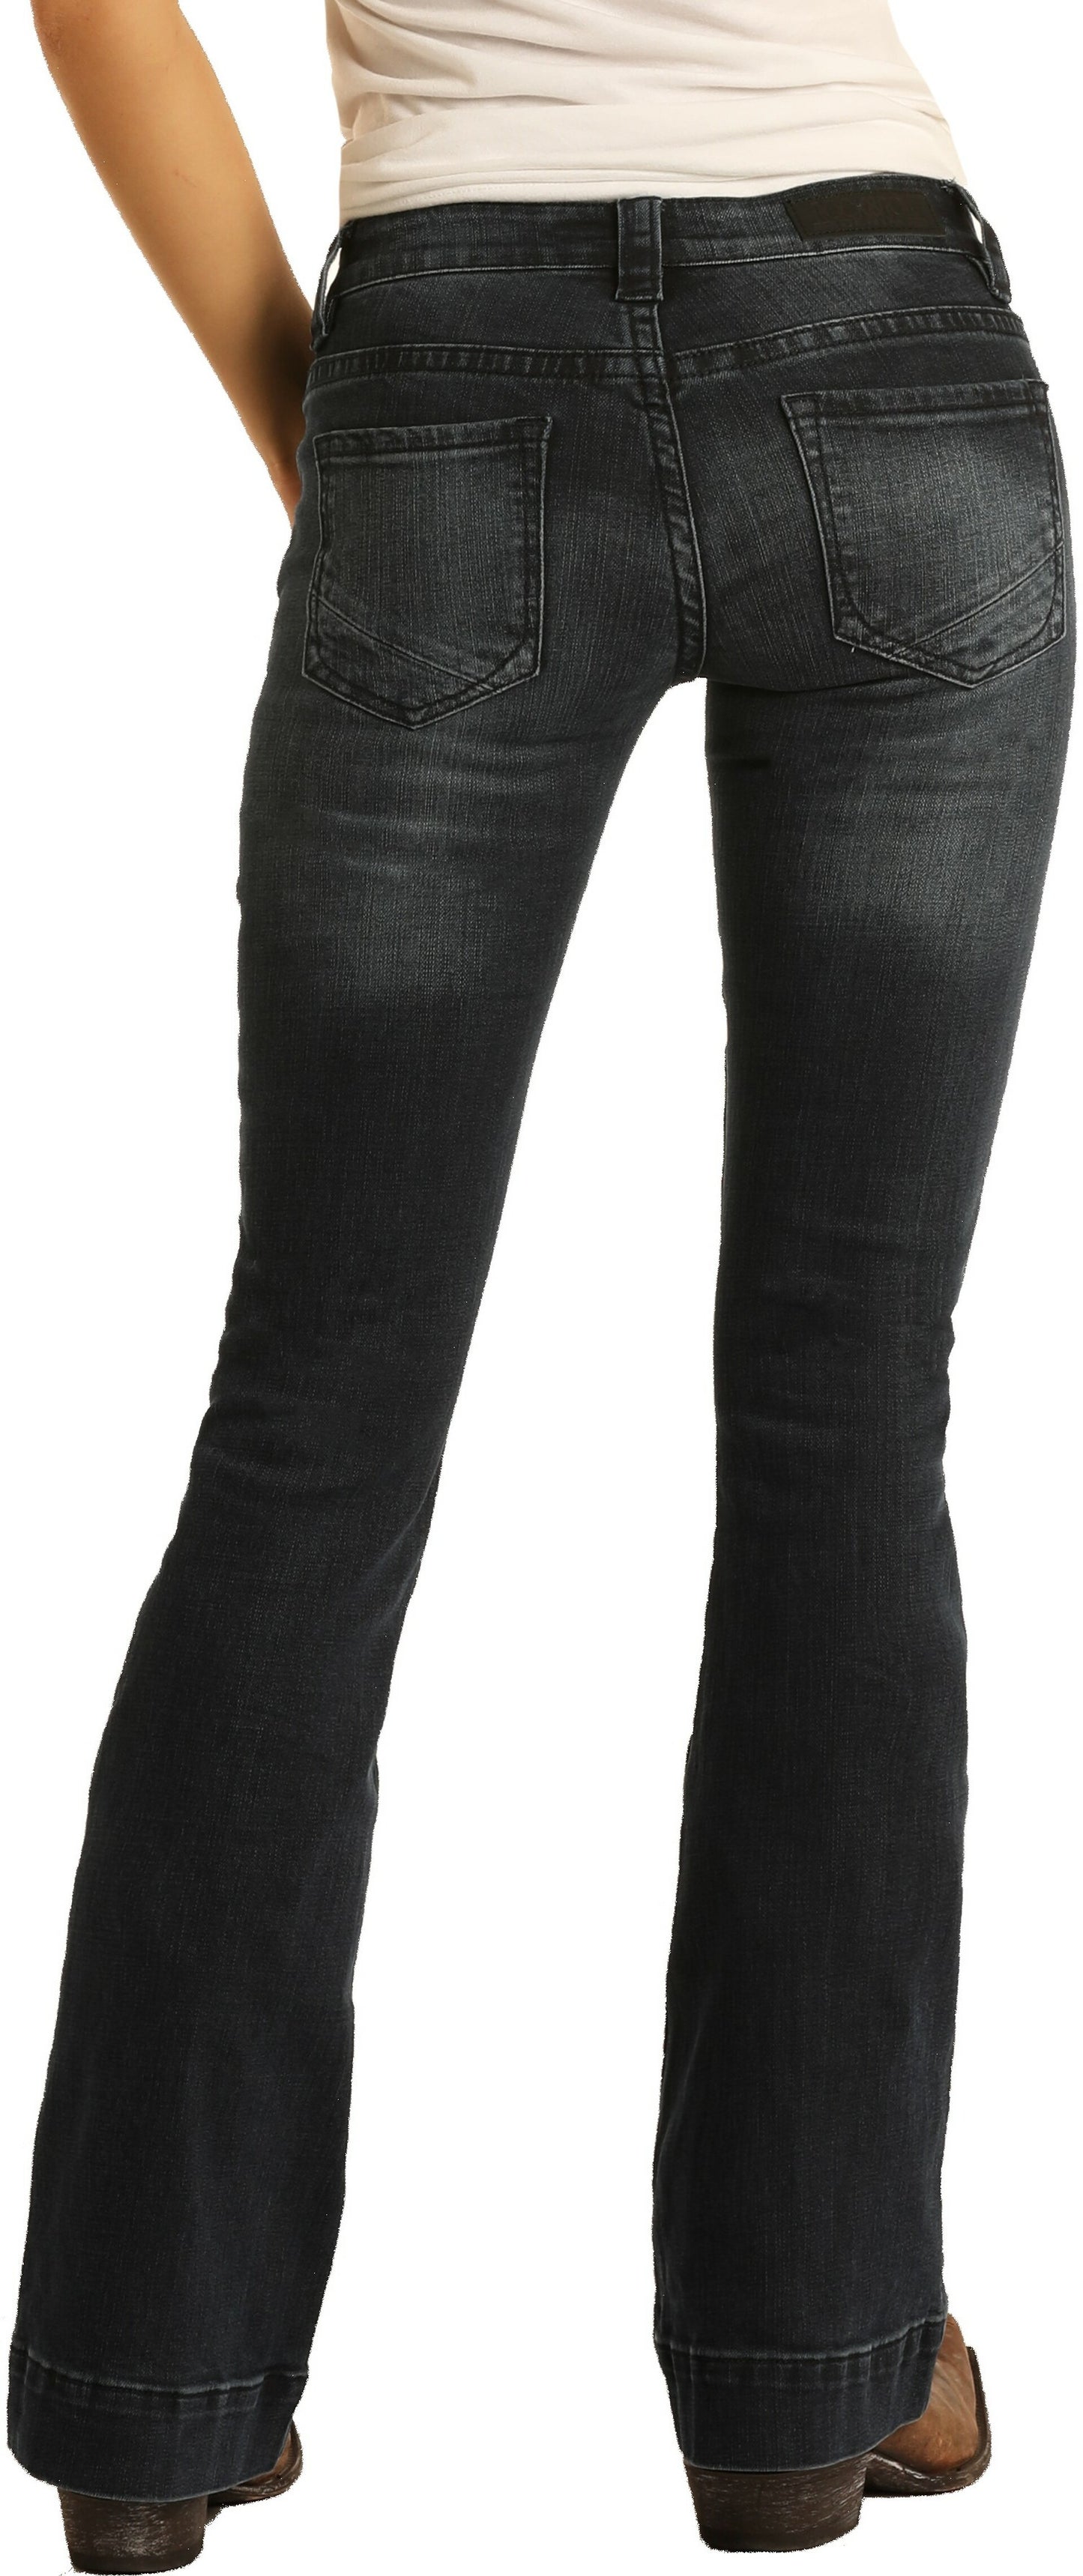 Rock & Roll Women's High Rise Trouser Jeans - Dark Wash